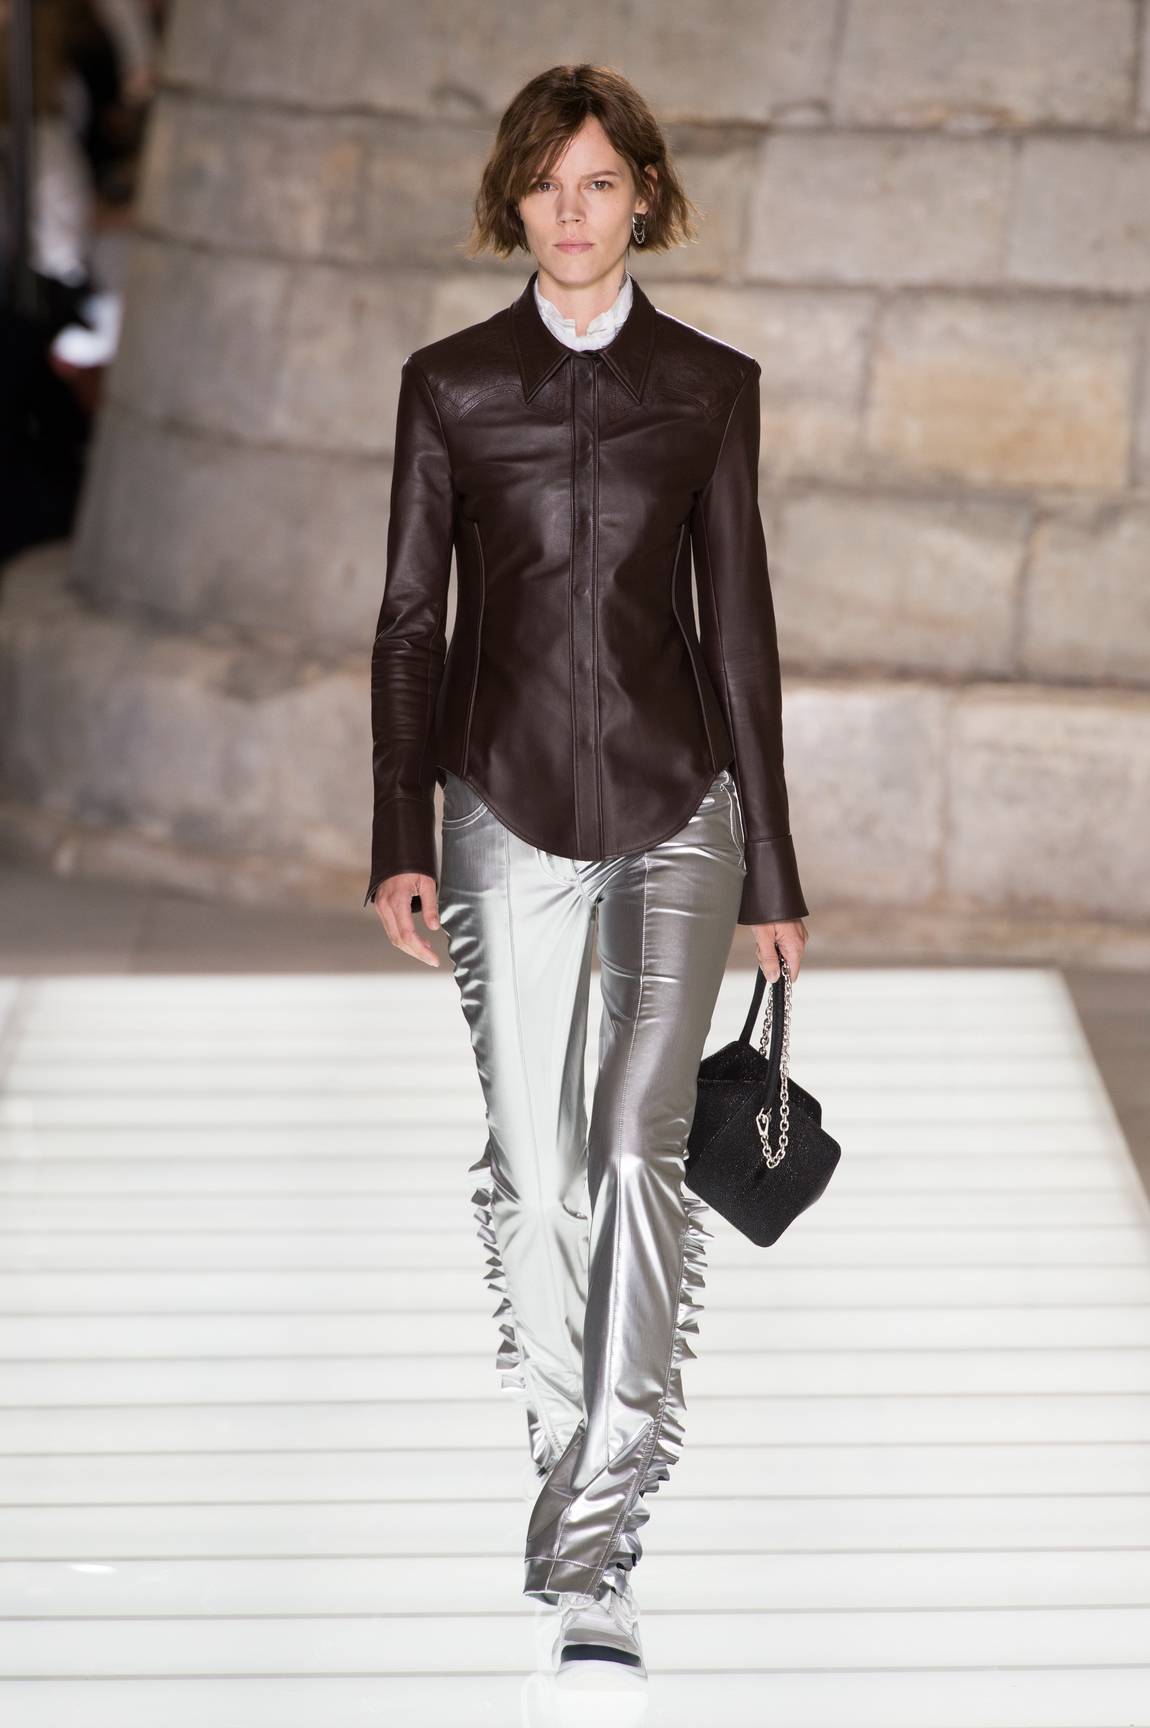 Miu Miu, Hermès, Louis Vuitton: Fashion Review - The New York Times